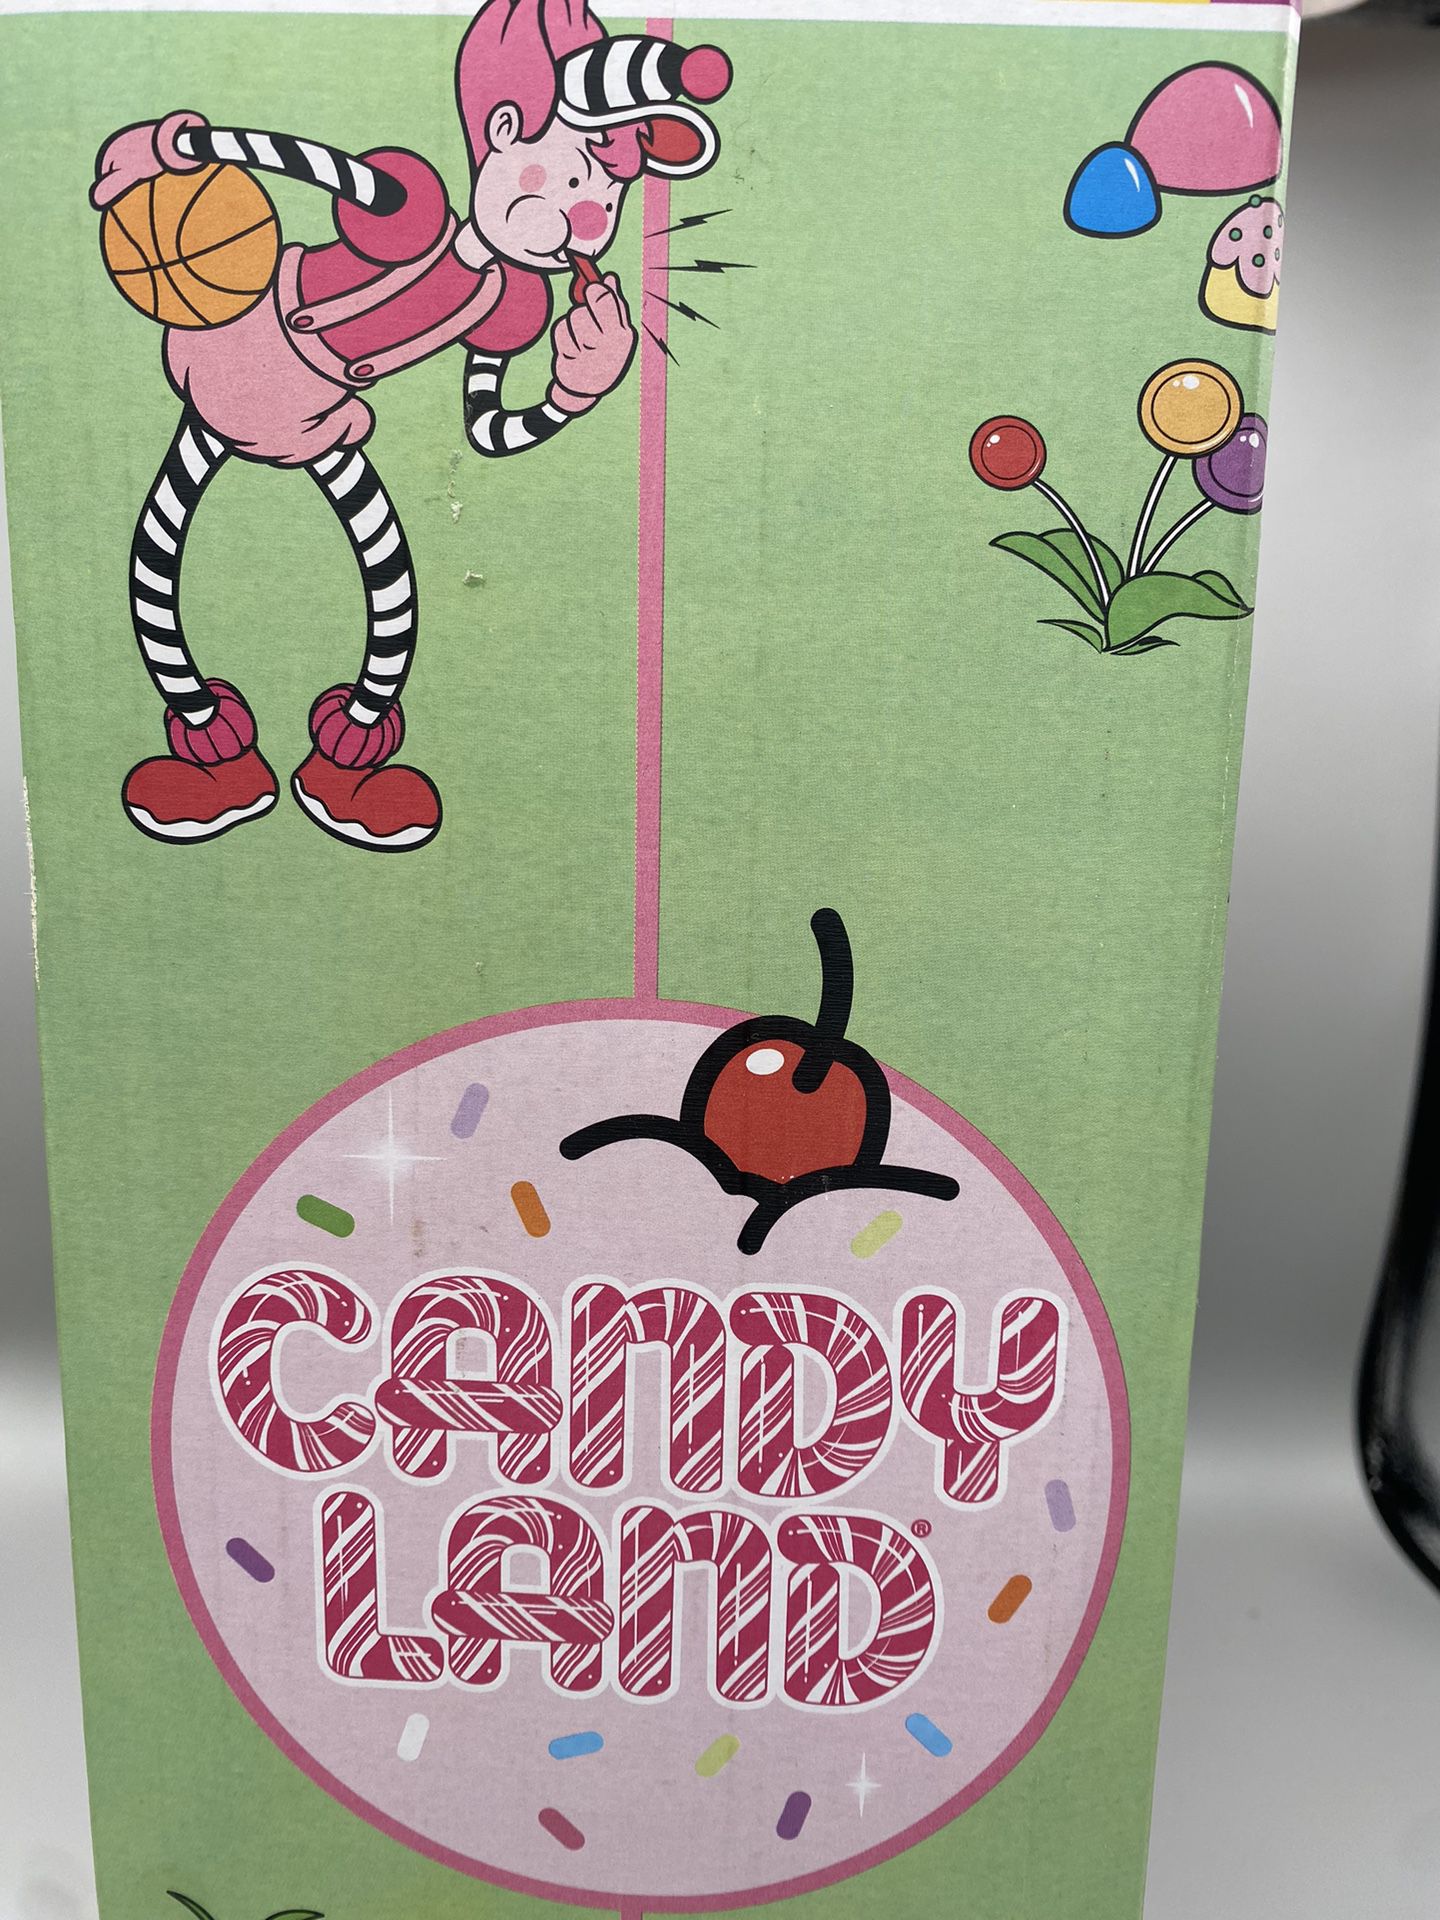 Reebok “Candyland” Kamikaze 11.5m Multi-color W/game board Box